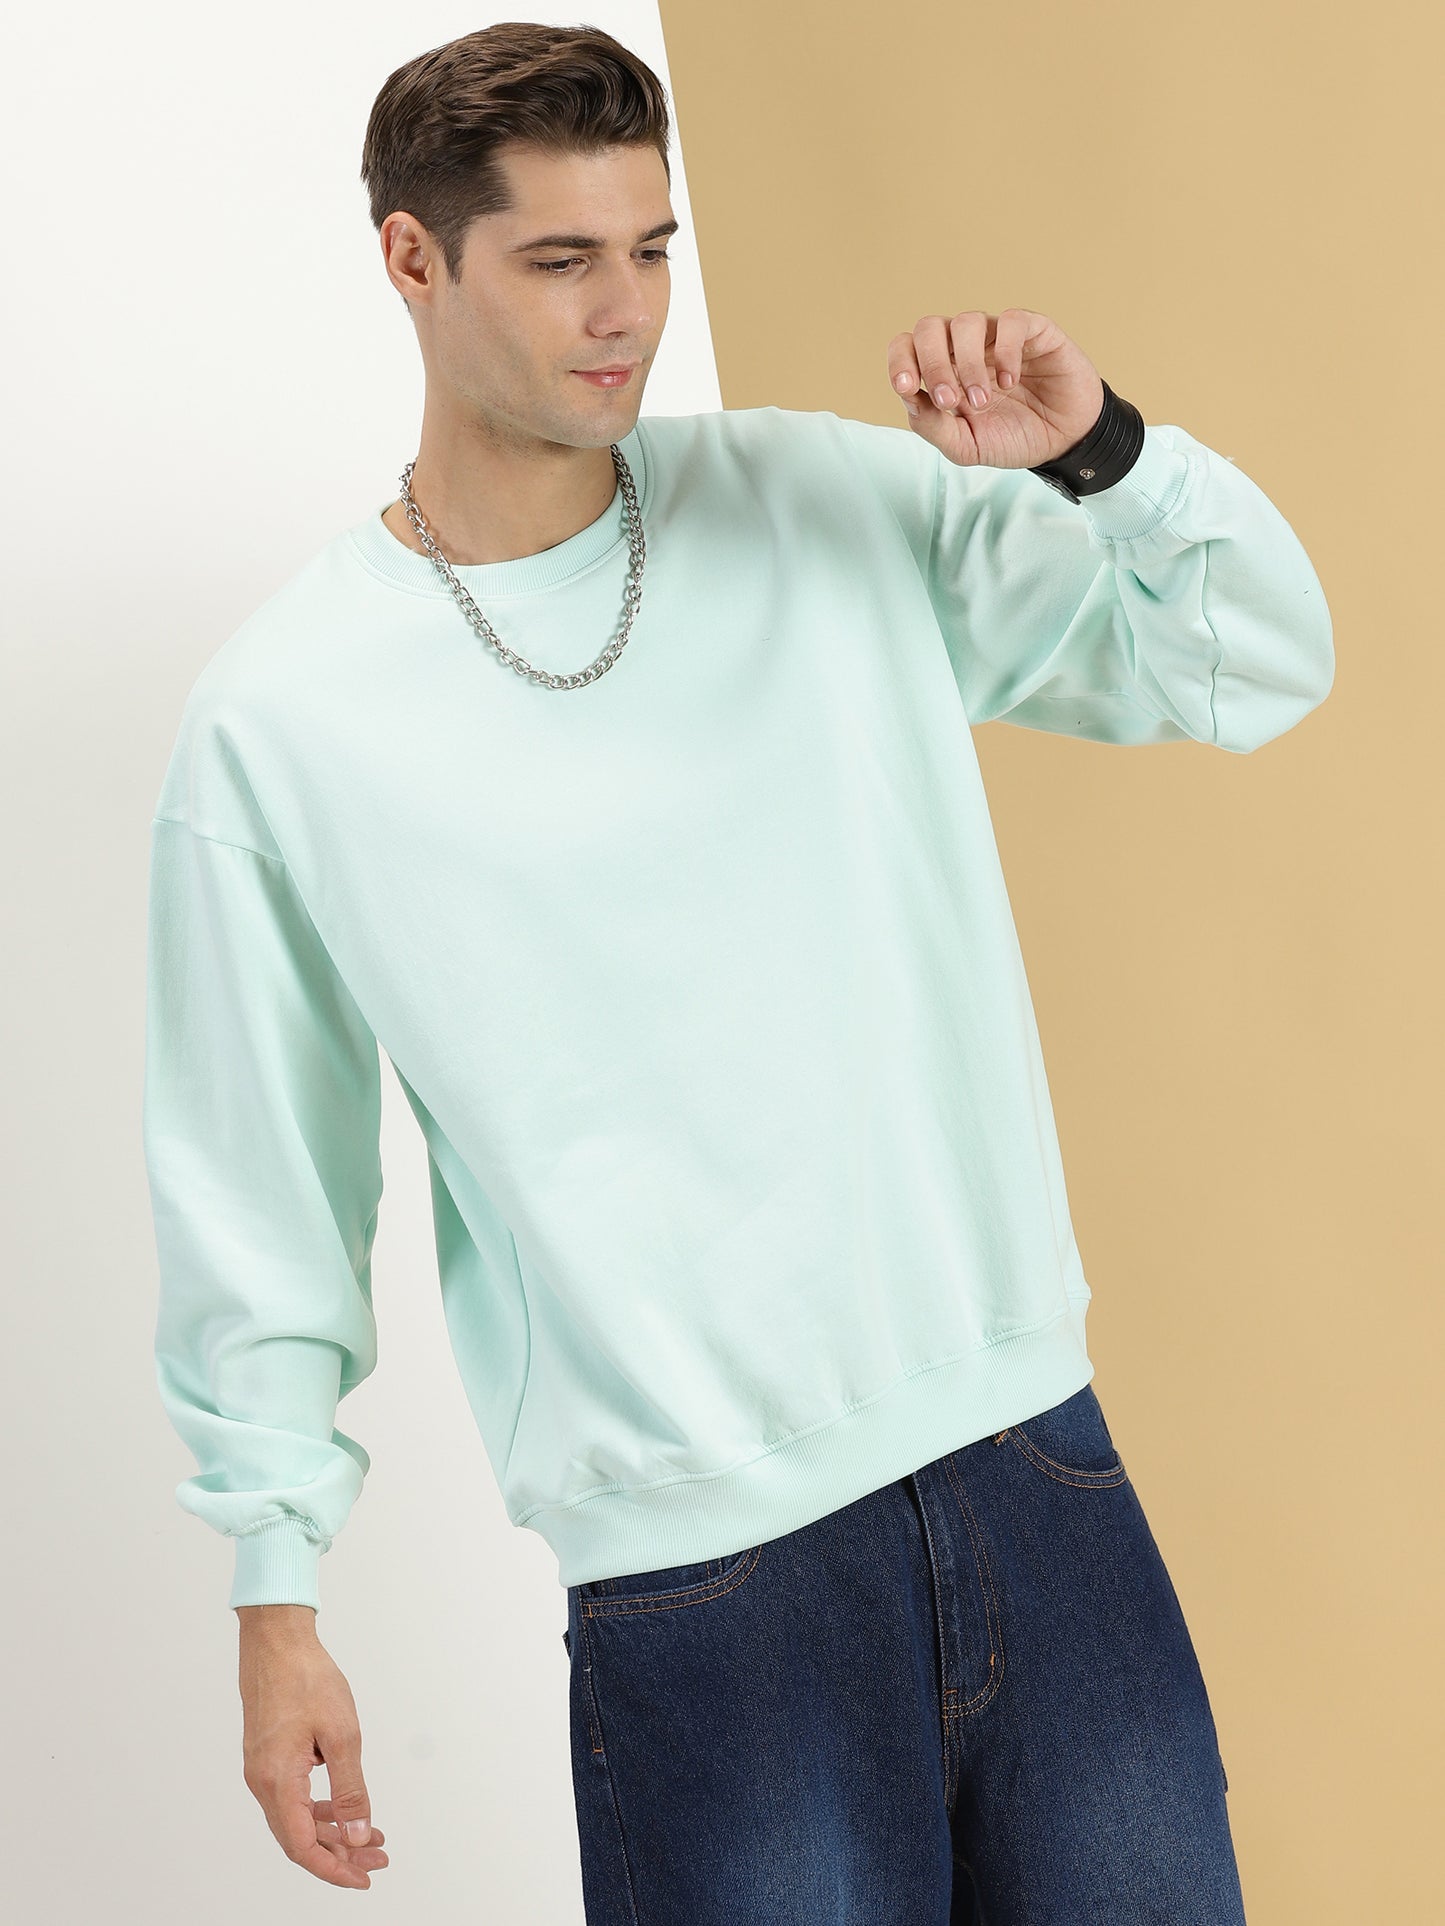 Buy oversized sweatshirt for mens